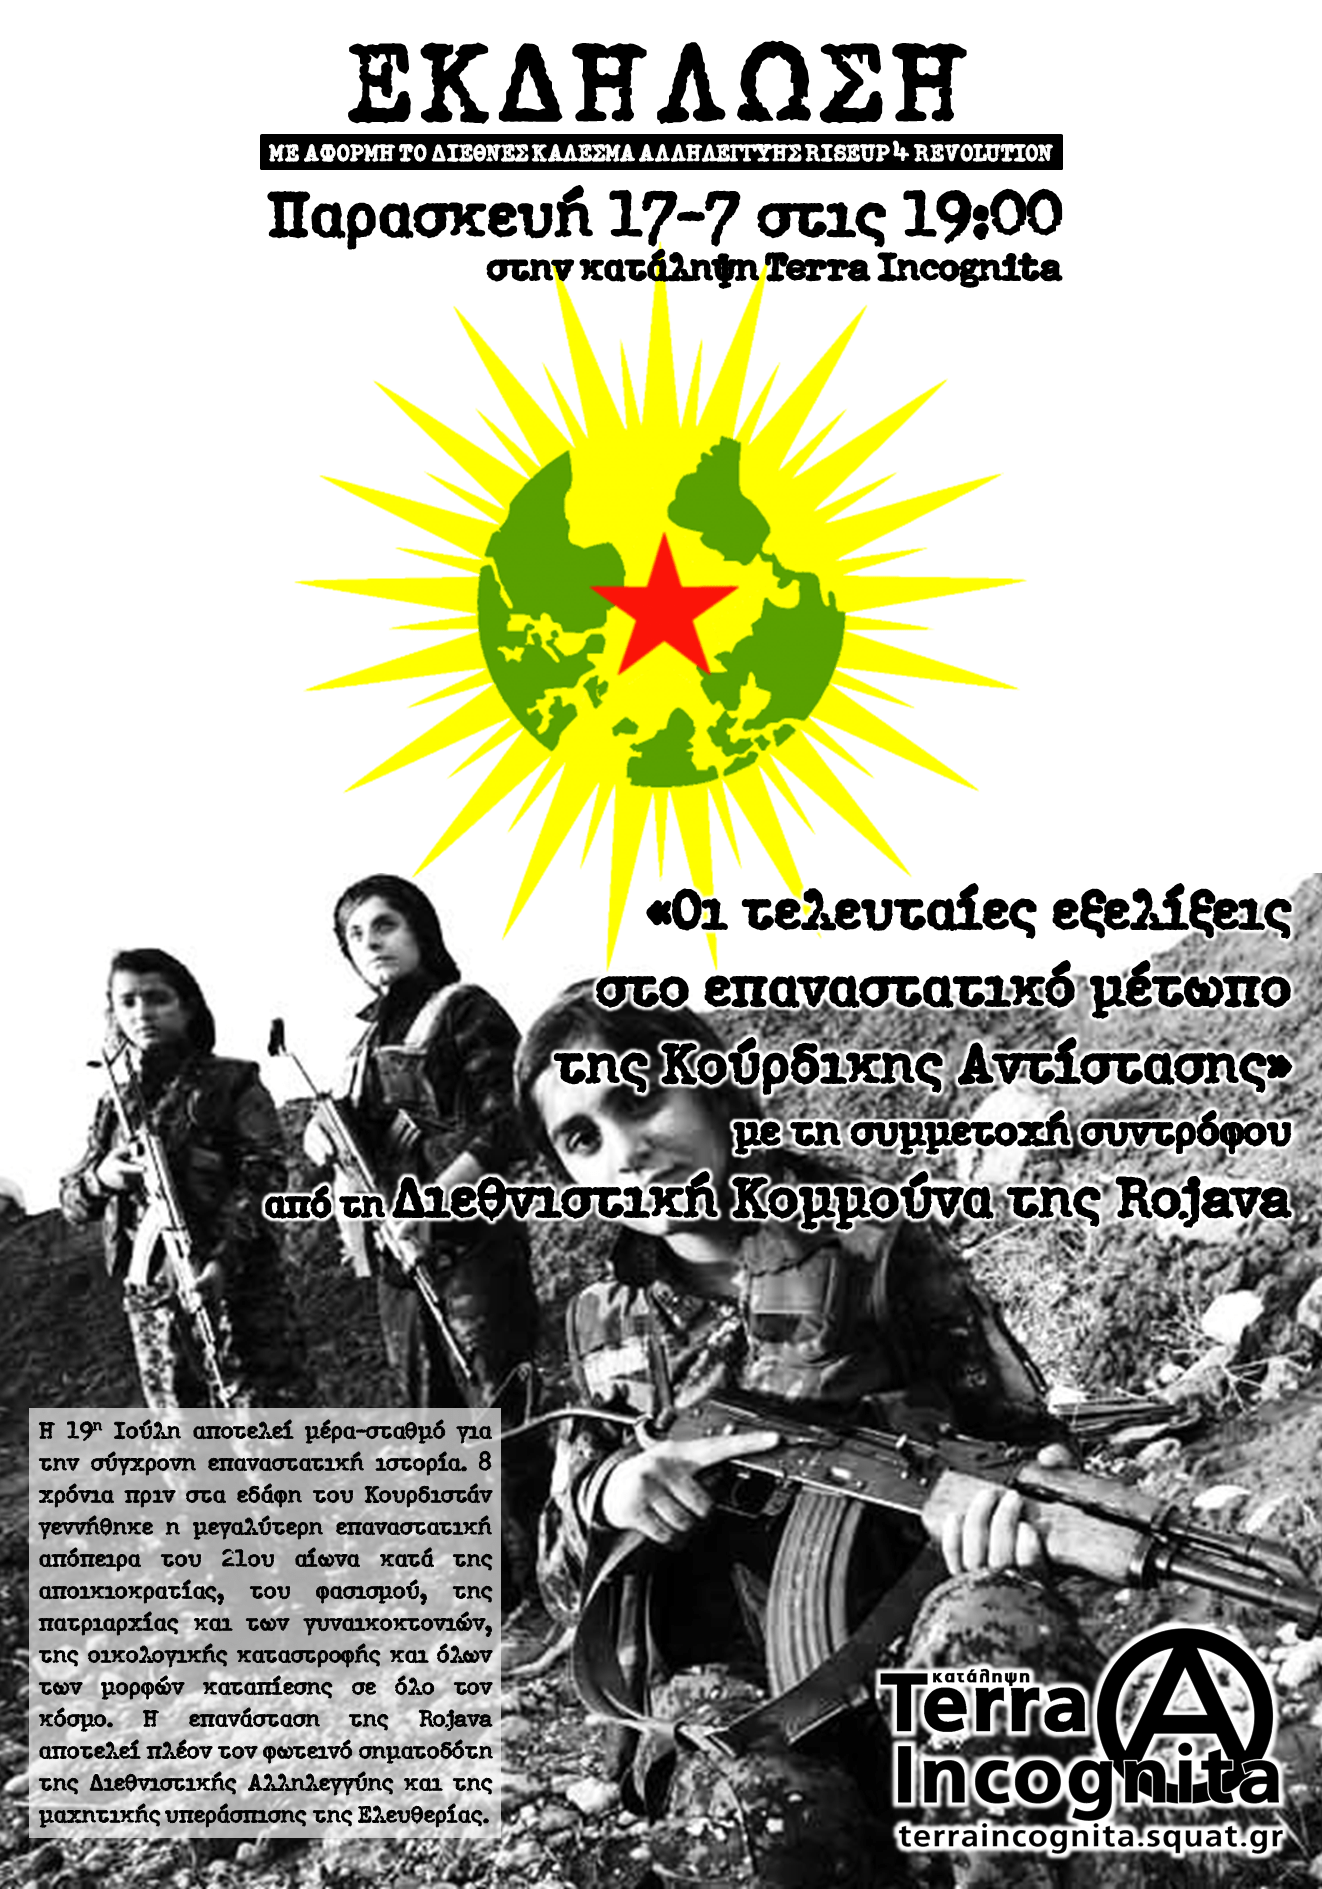 Terra Incognita: Τοποθετήσεις διεθνιστών συντροφισσών και συντρόφων στην εκδήλωση αλληλεγγύης στην κούρδικη αντίσταση